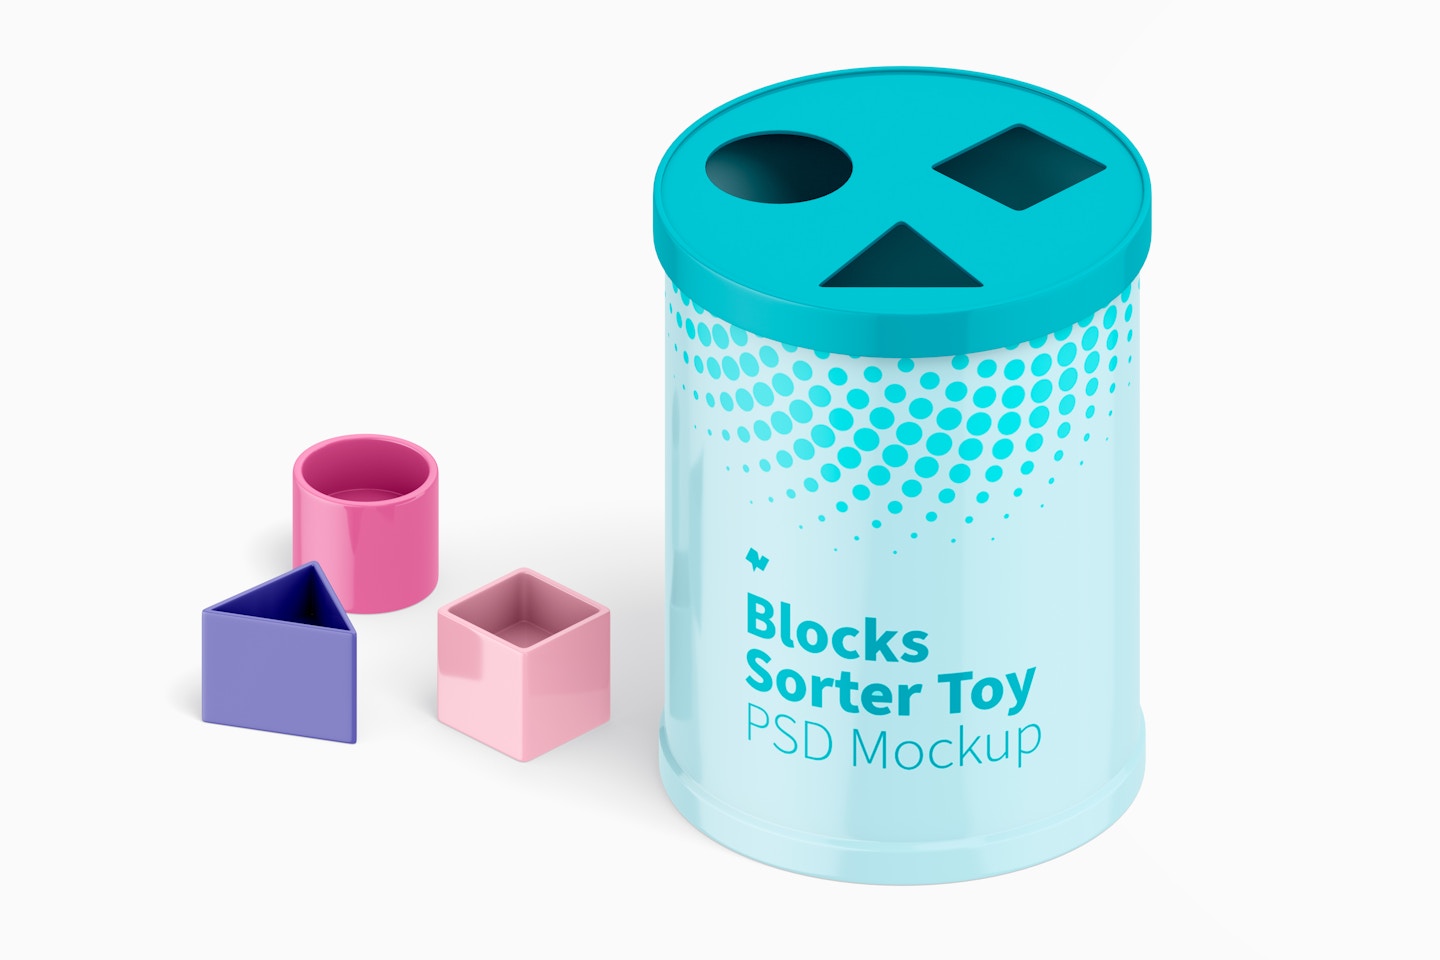 Blocks Sorter Toy Mockup, Isometric View